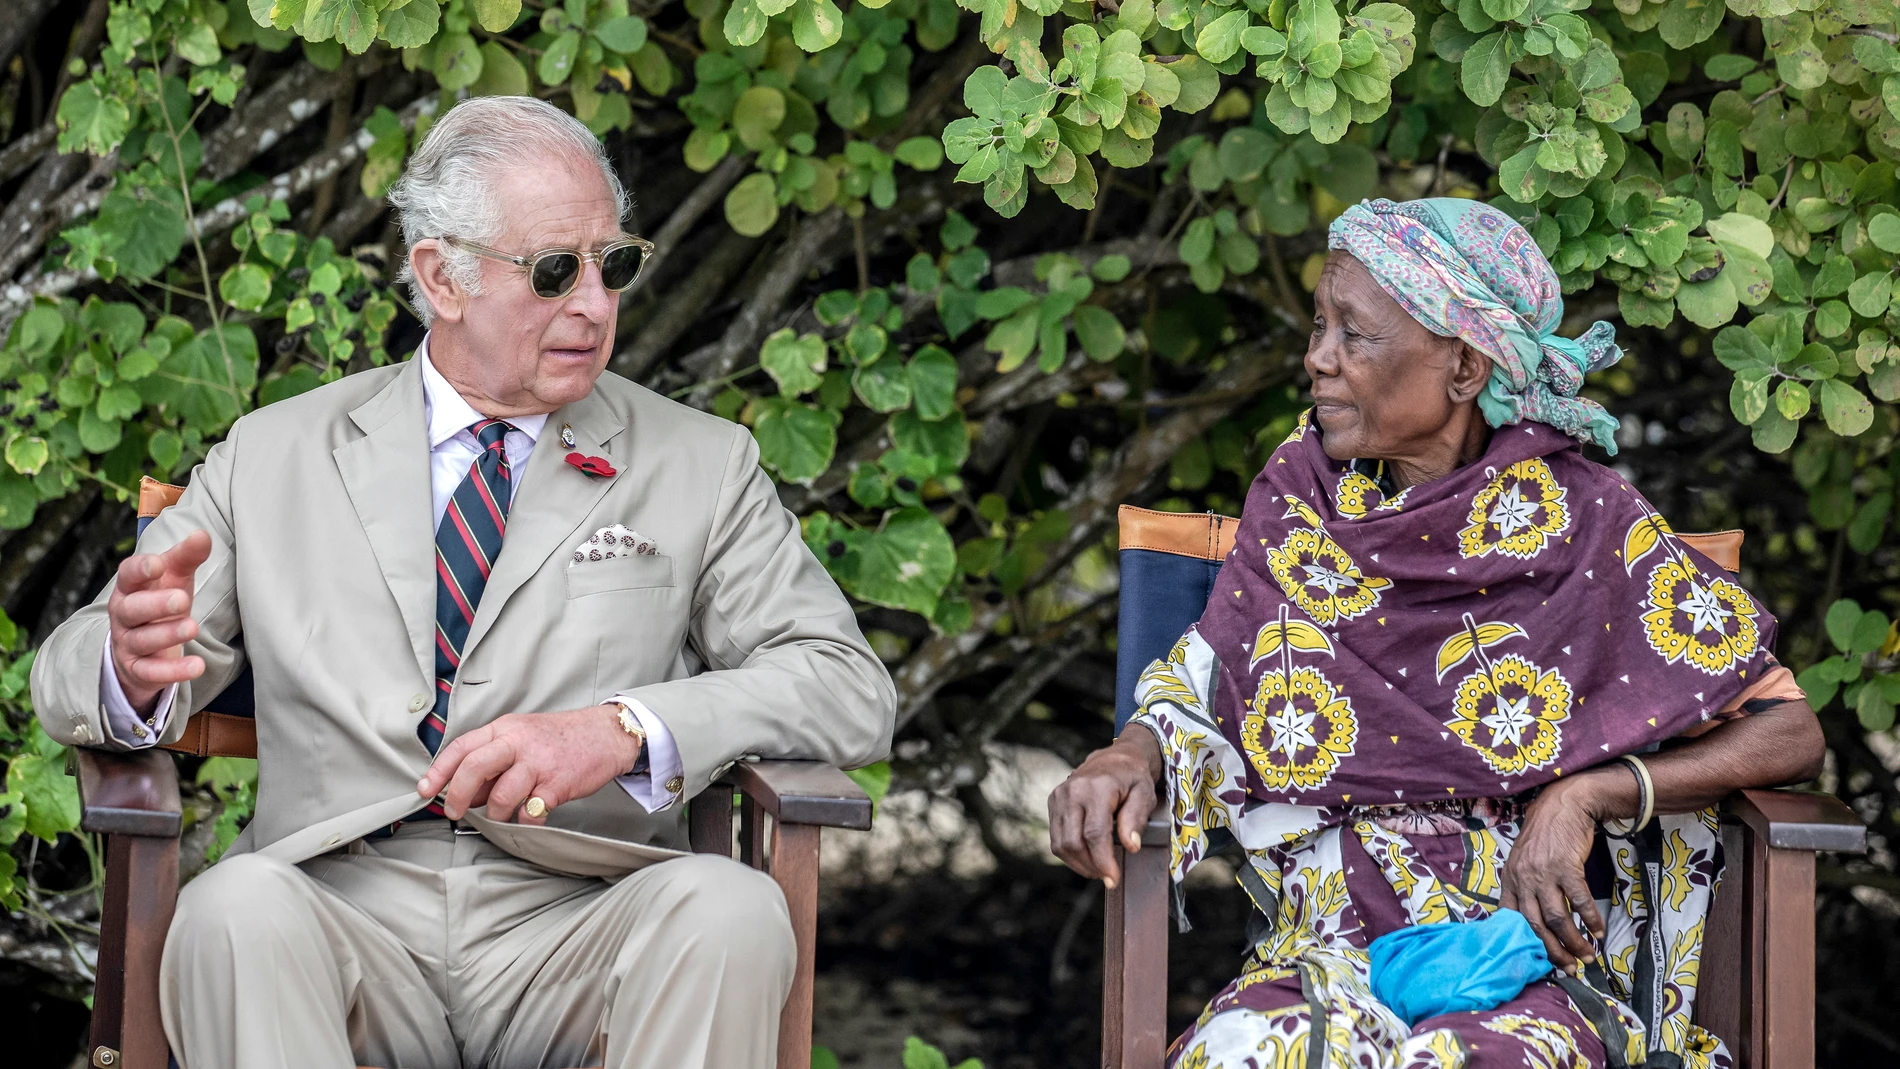 Britain's King Charles III, left, gestures as he meets with community elders during a visit to Kuruwitu Conservation Area in Kilifi, Kenya, Thursday, Nov. 2, 2023. (Luis Tato/Pool Photo via AP)